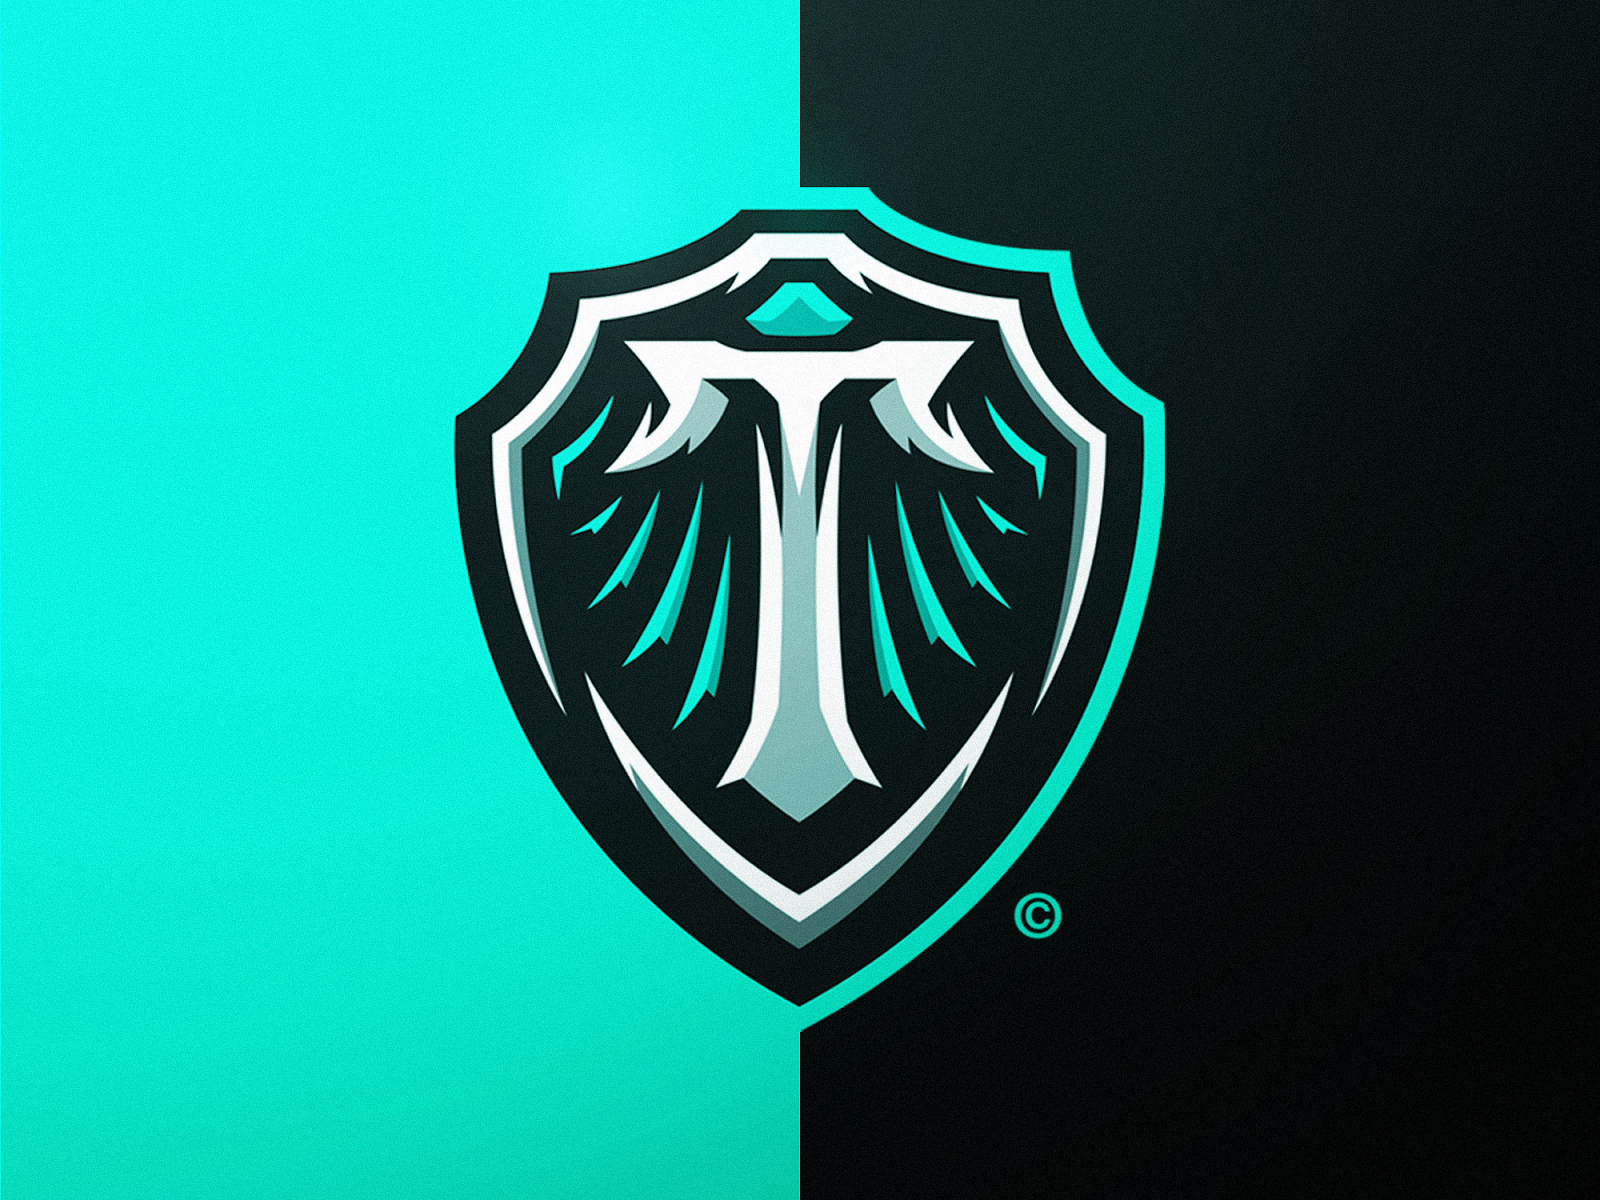 T shield. Gaming Shield logo. Esports logo. Логотип щит КС го. Спарта щит логотип.